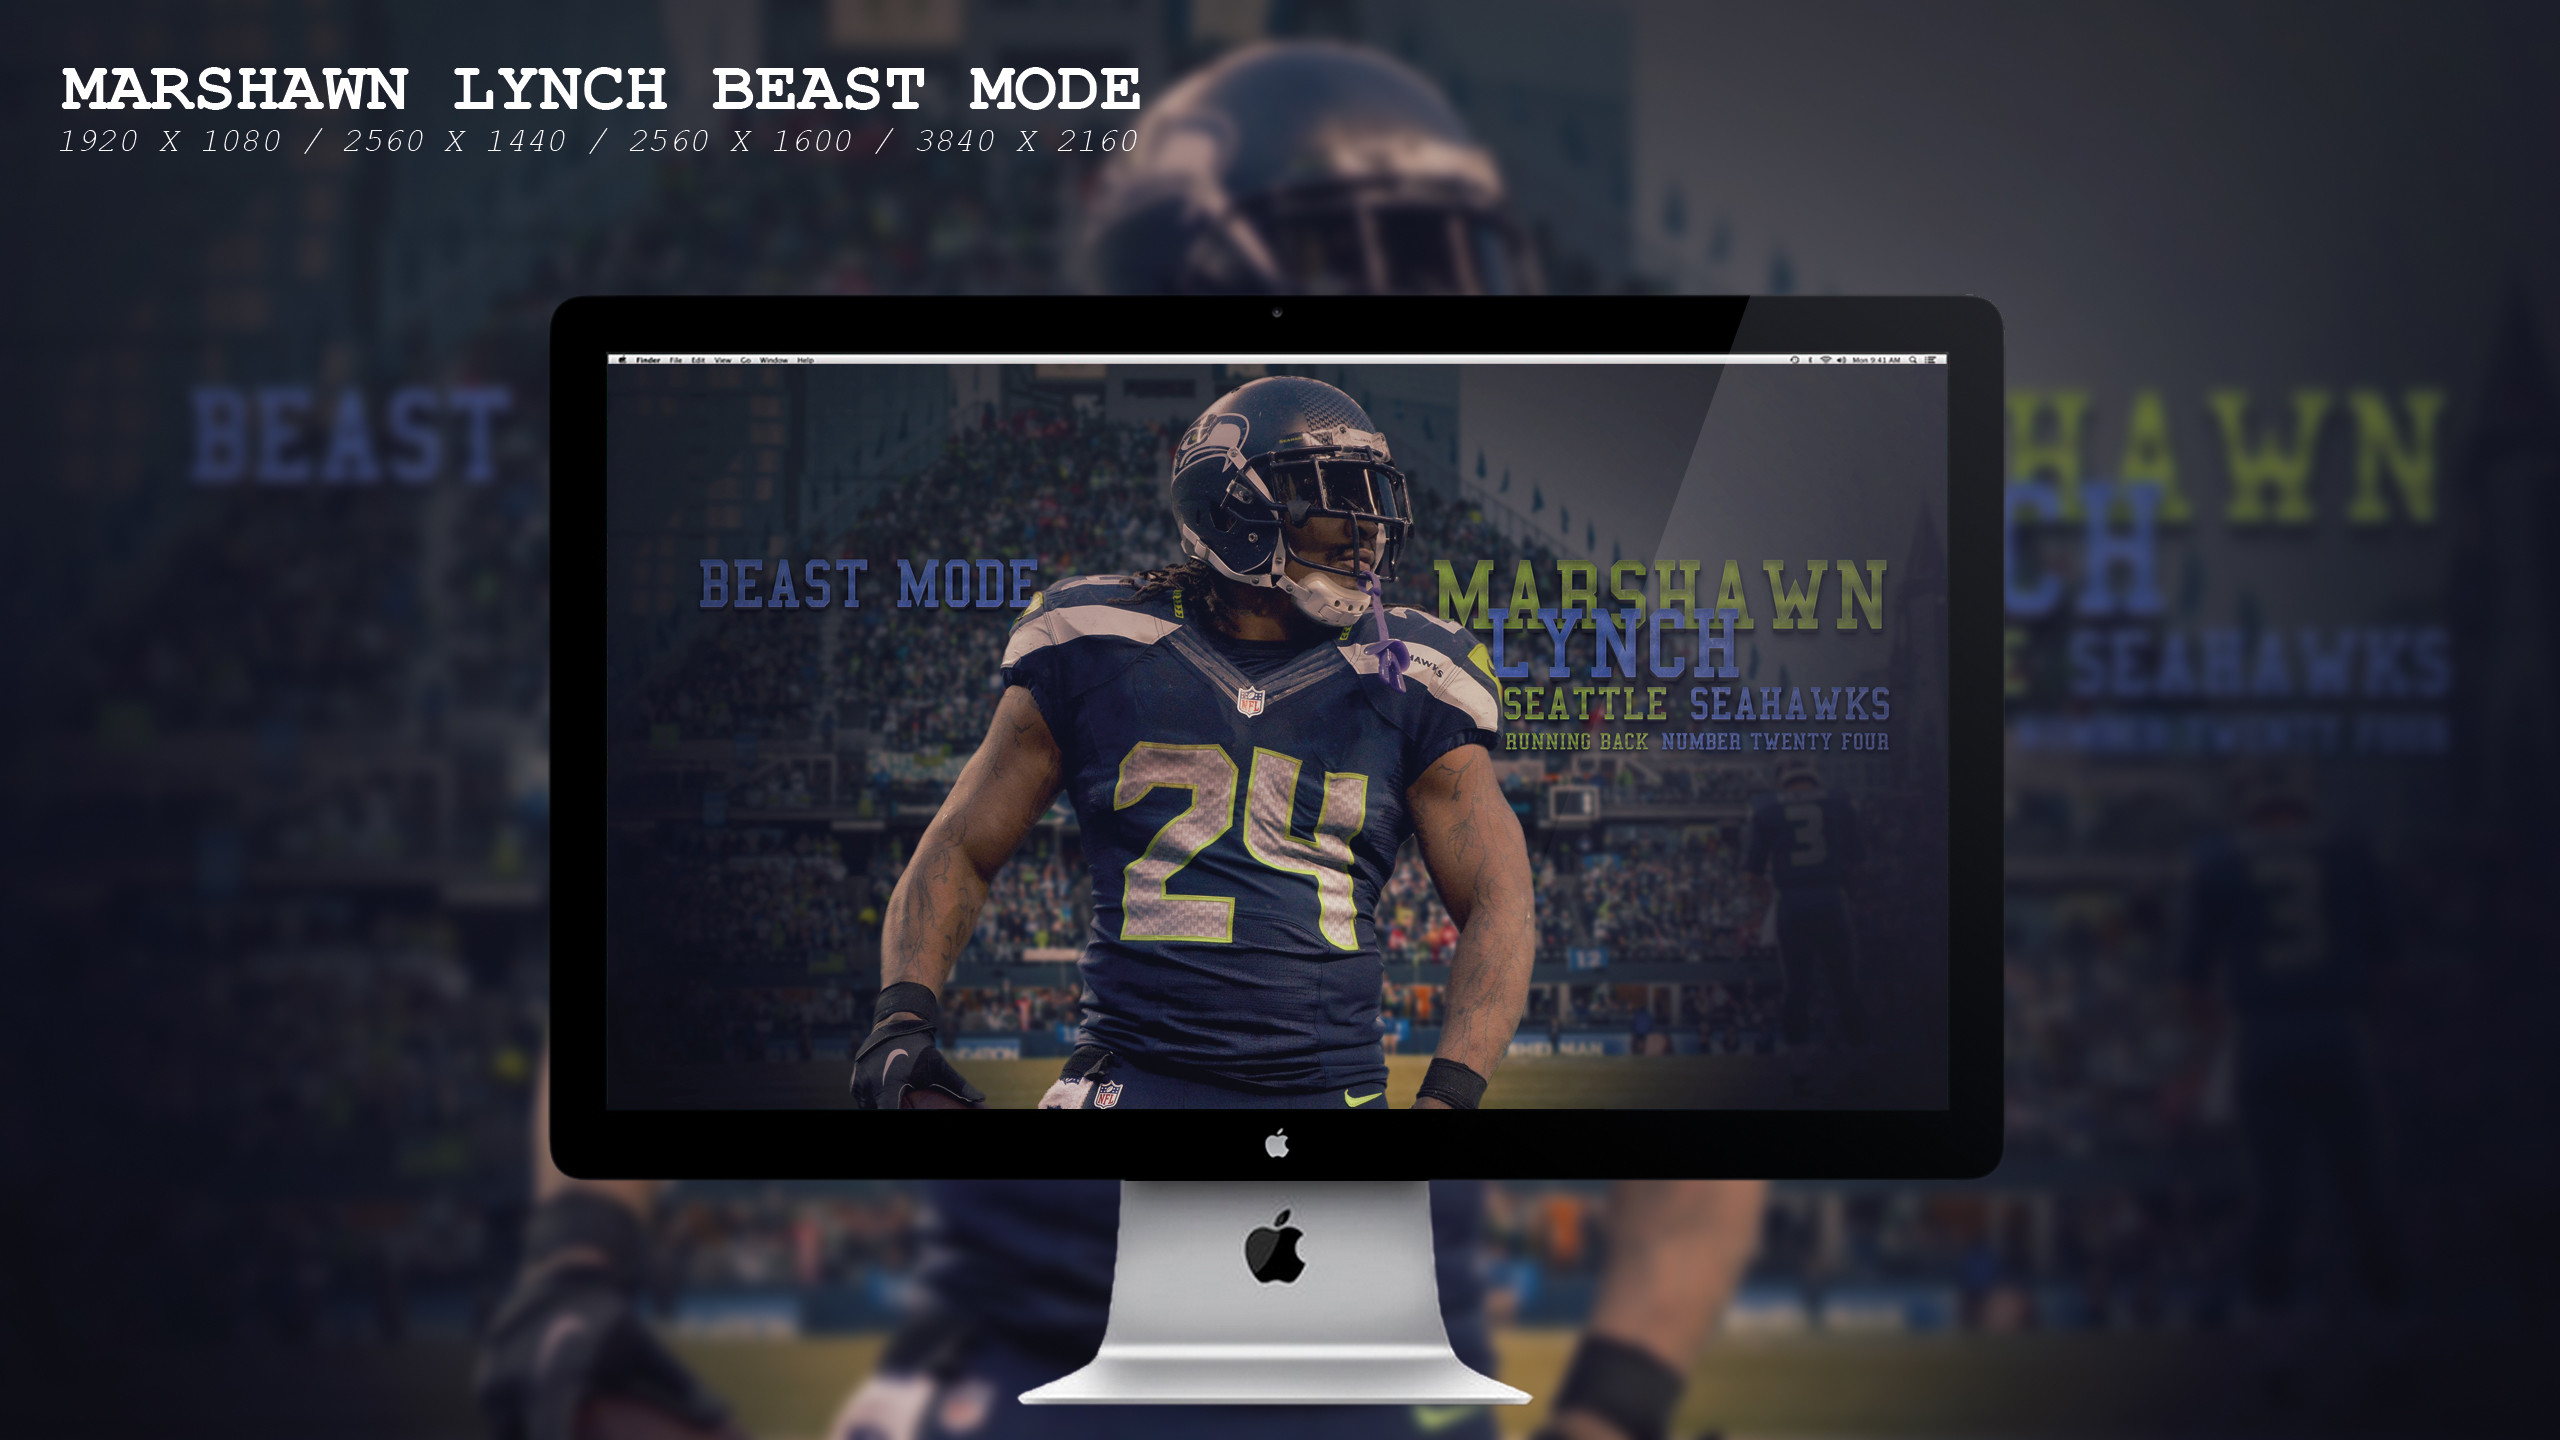 2560x1440 ... Marshawn Lynch Beast Mode Wallpaper HD by BeAware8